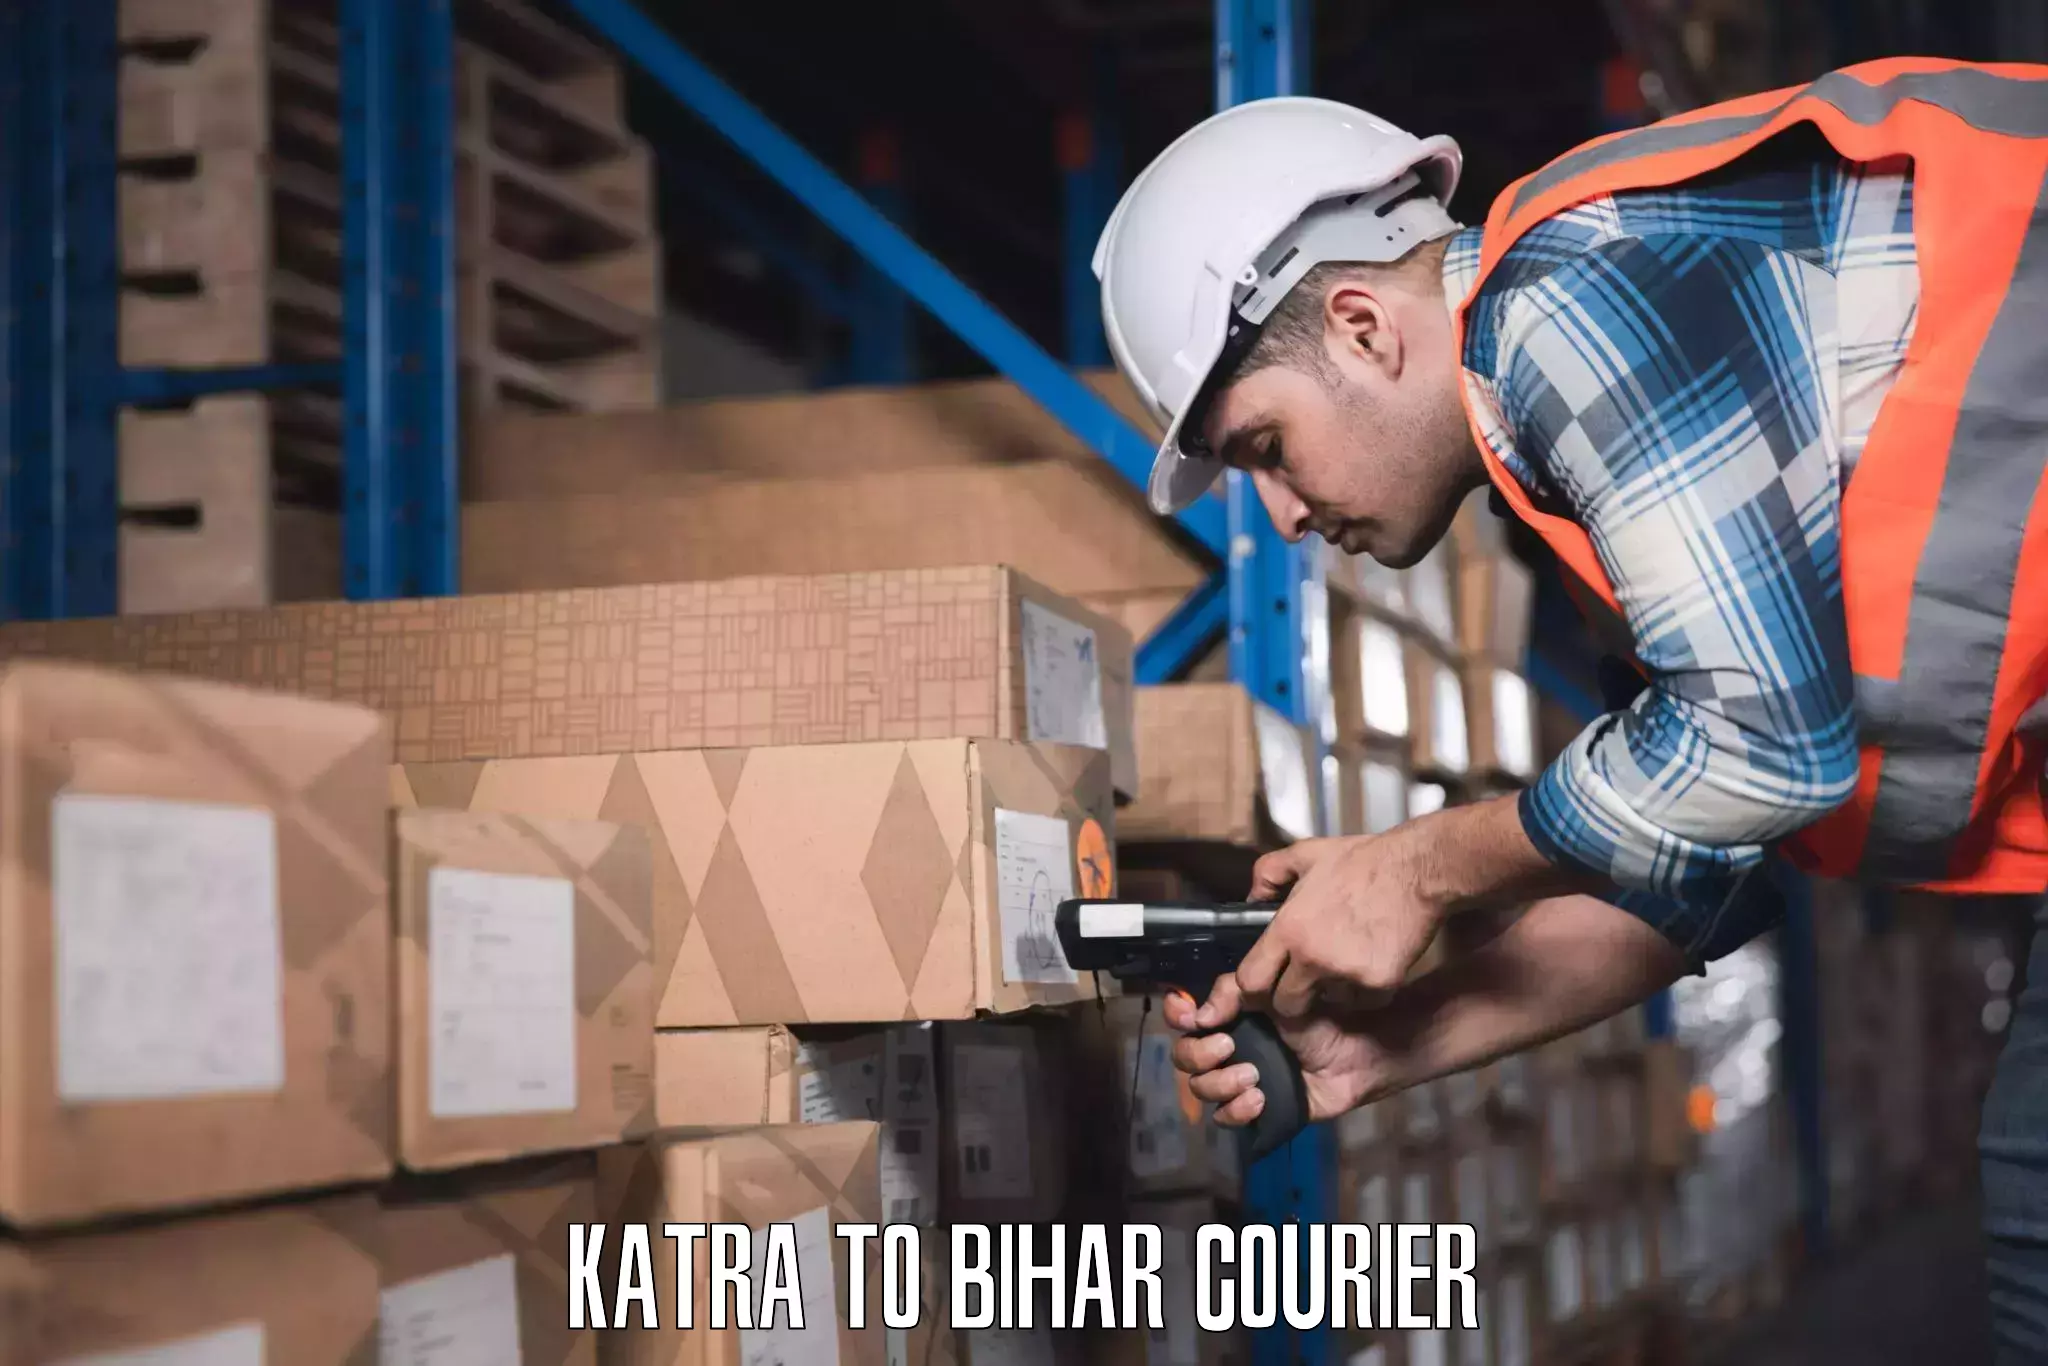 Luggage dispatch service Katra to Bihar